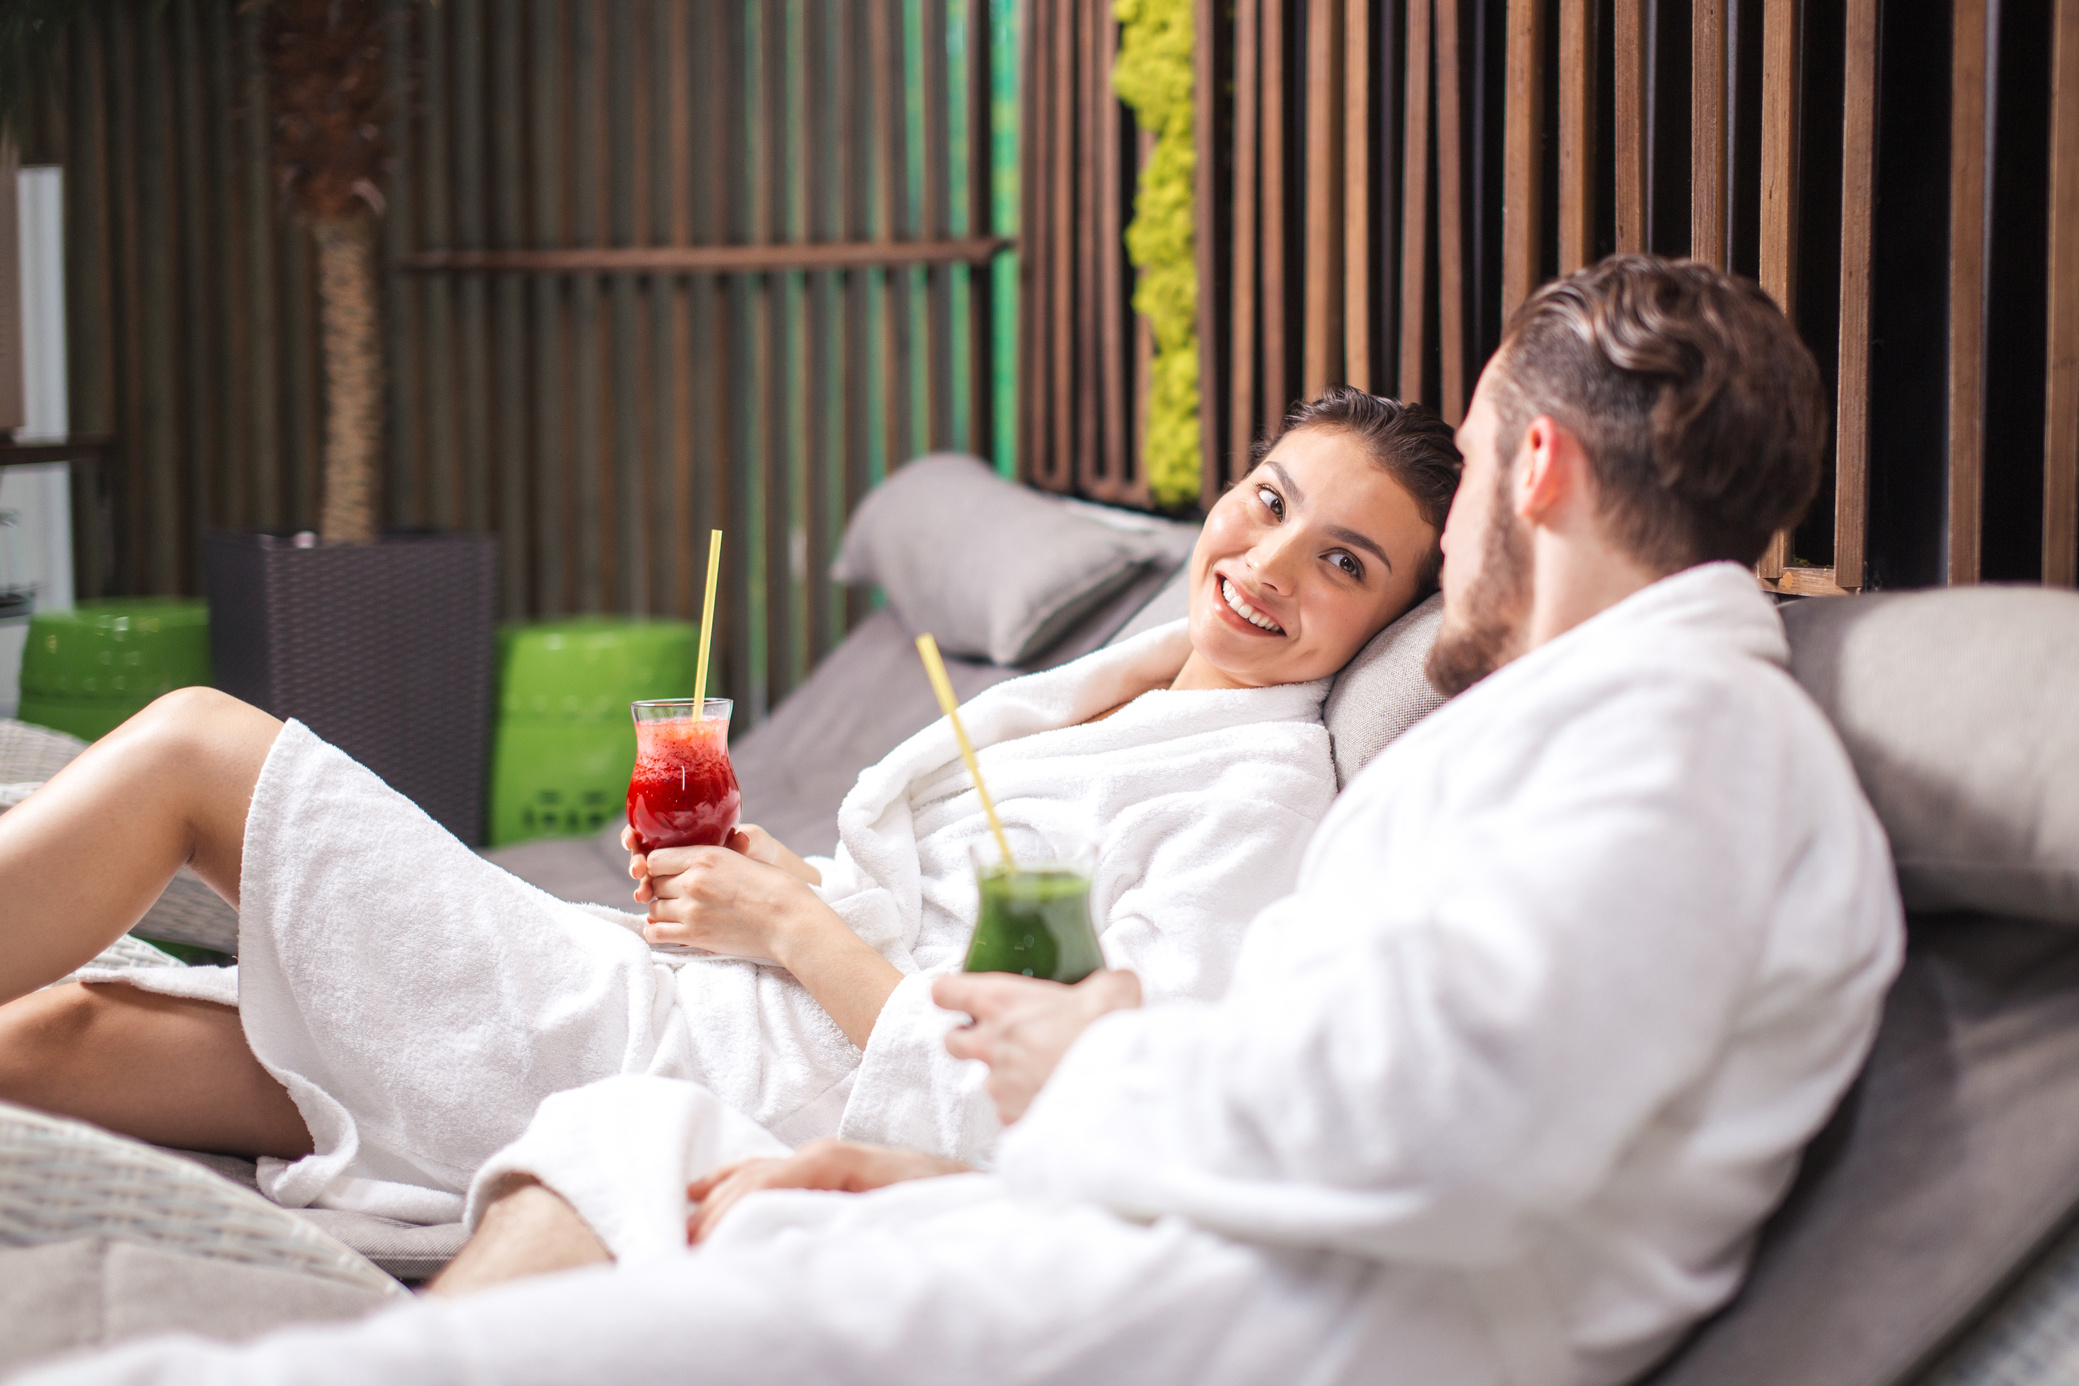 spa program for couples. romantic date for amorose in spa resort